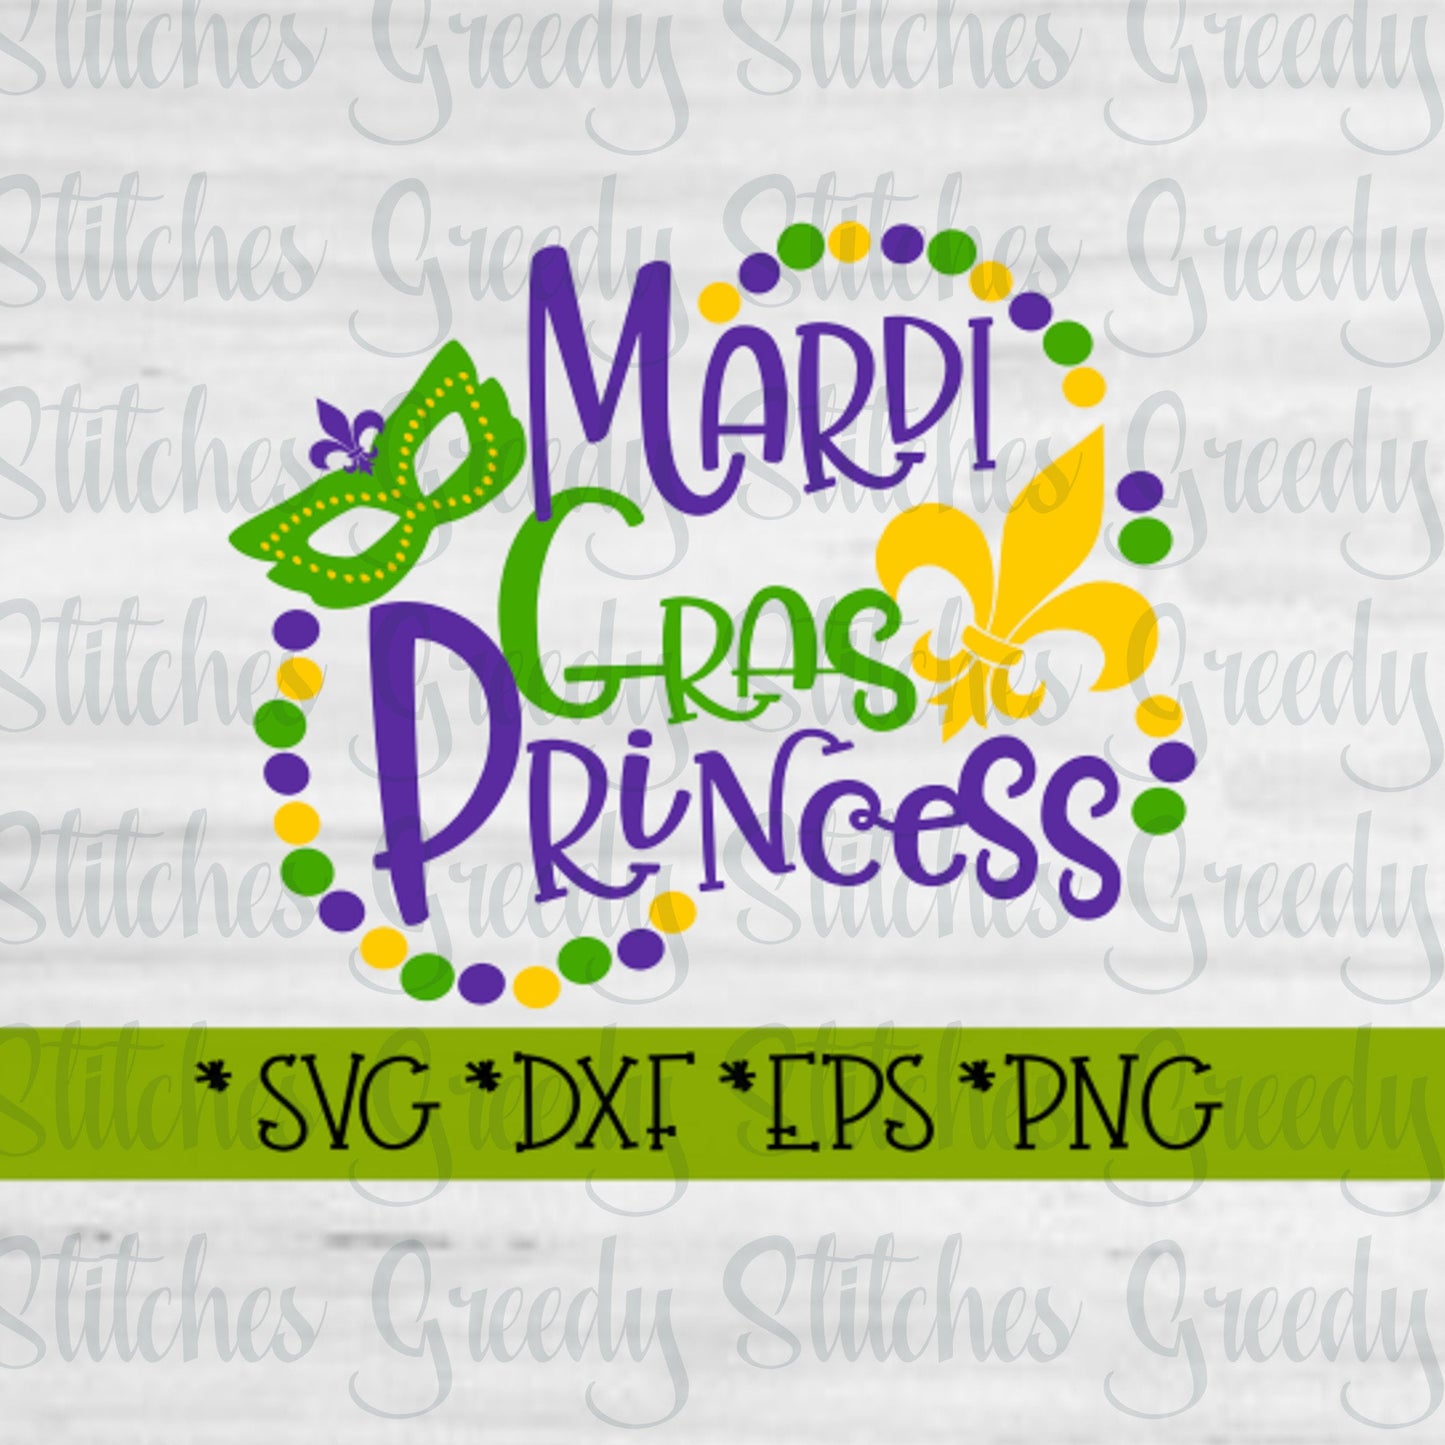 Mardi Gras Princess svg, dxf, eps, png.  Mardi Gras SvG | Mardi Gras Princess SvG | Mardi Gras Princess DxF | Instant Download Cut Files.